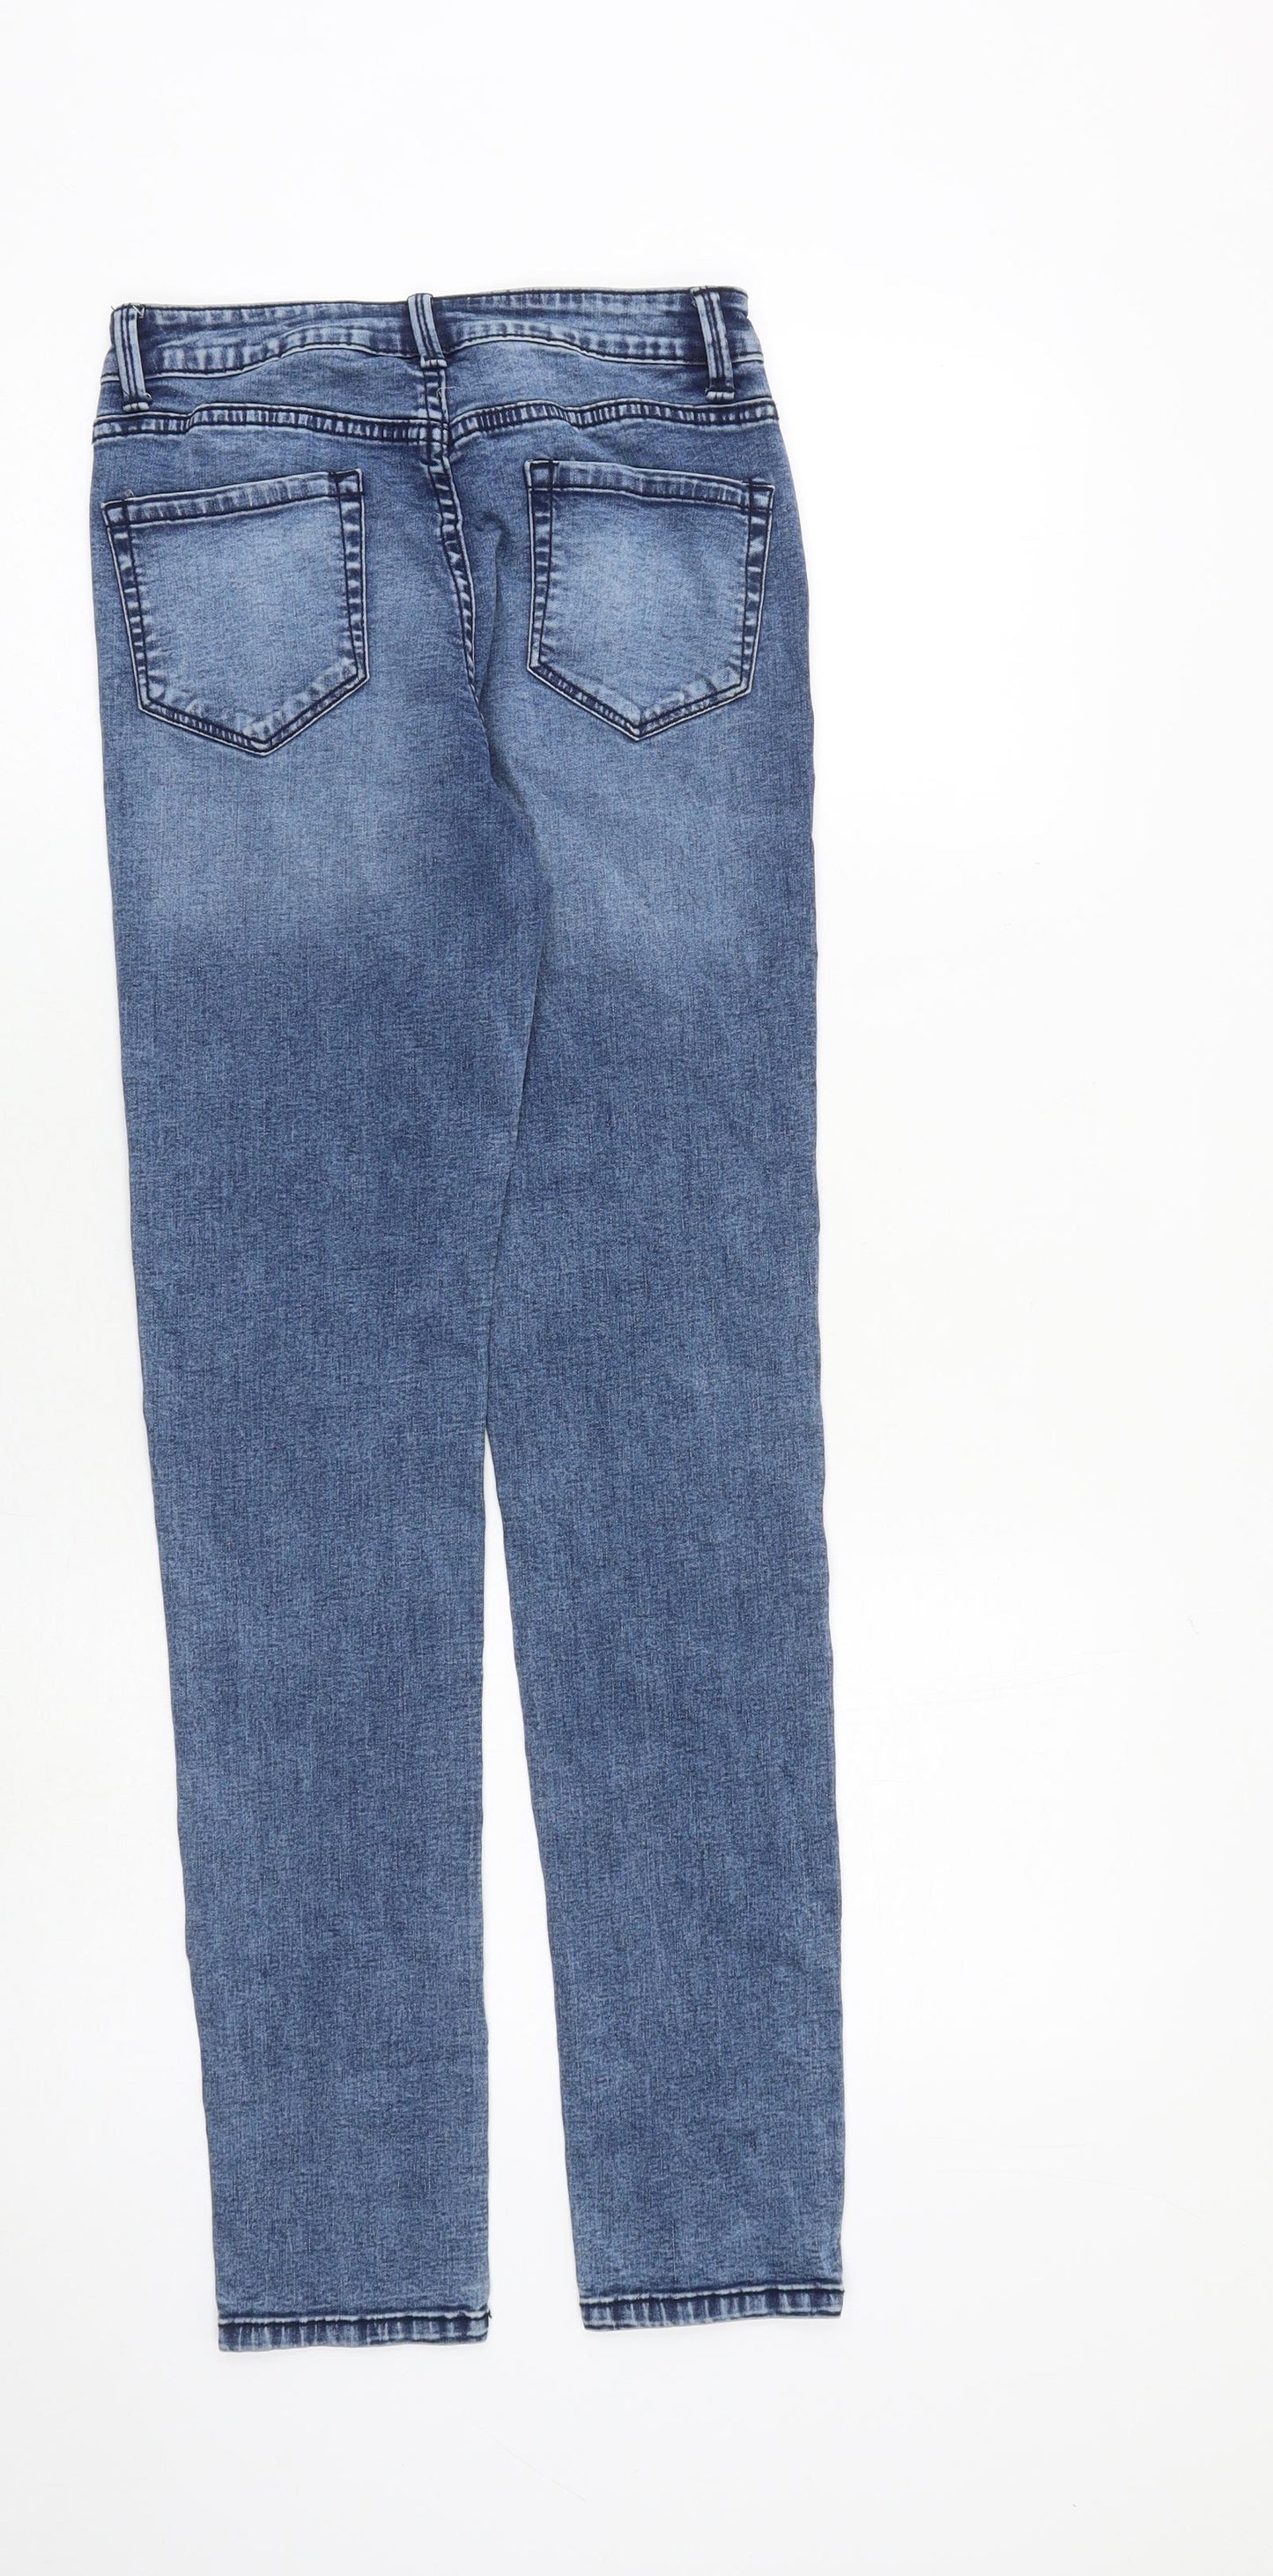 Denim & Co. Womens Blue Cotton Skinny Jeans Size 8 L30 in Regular Zip